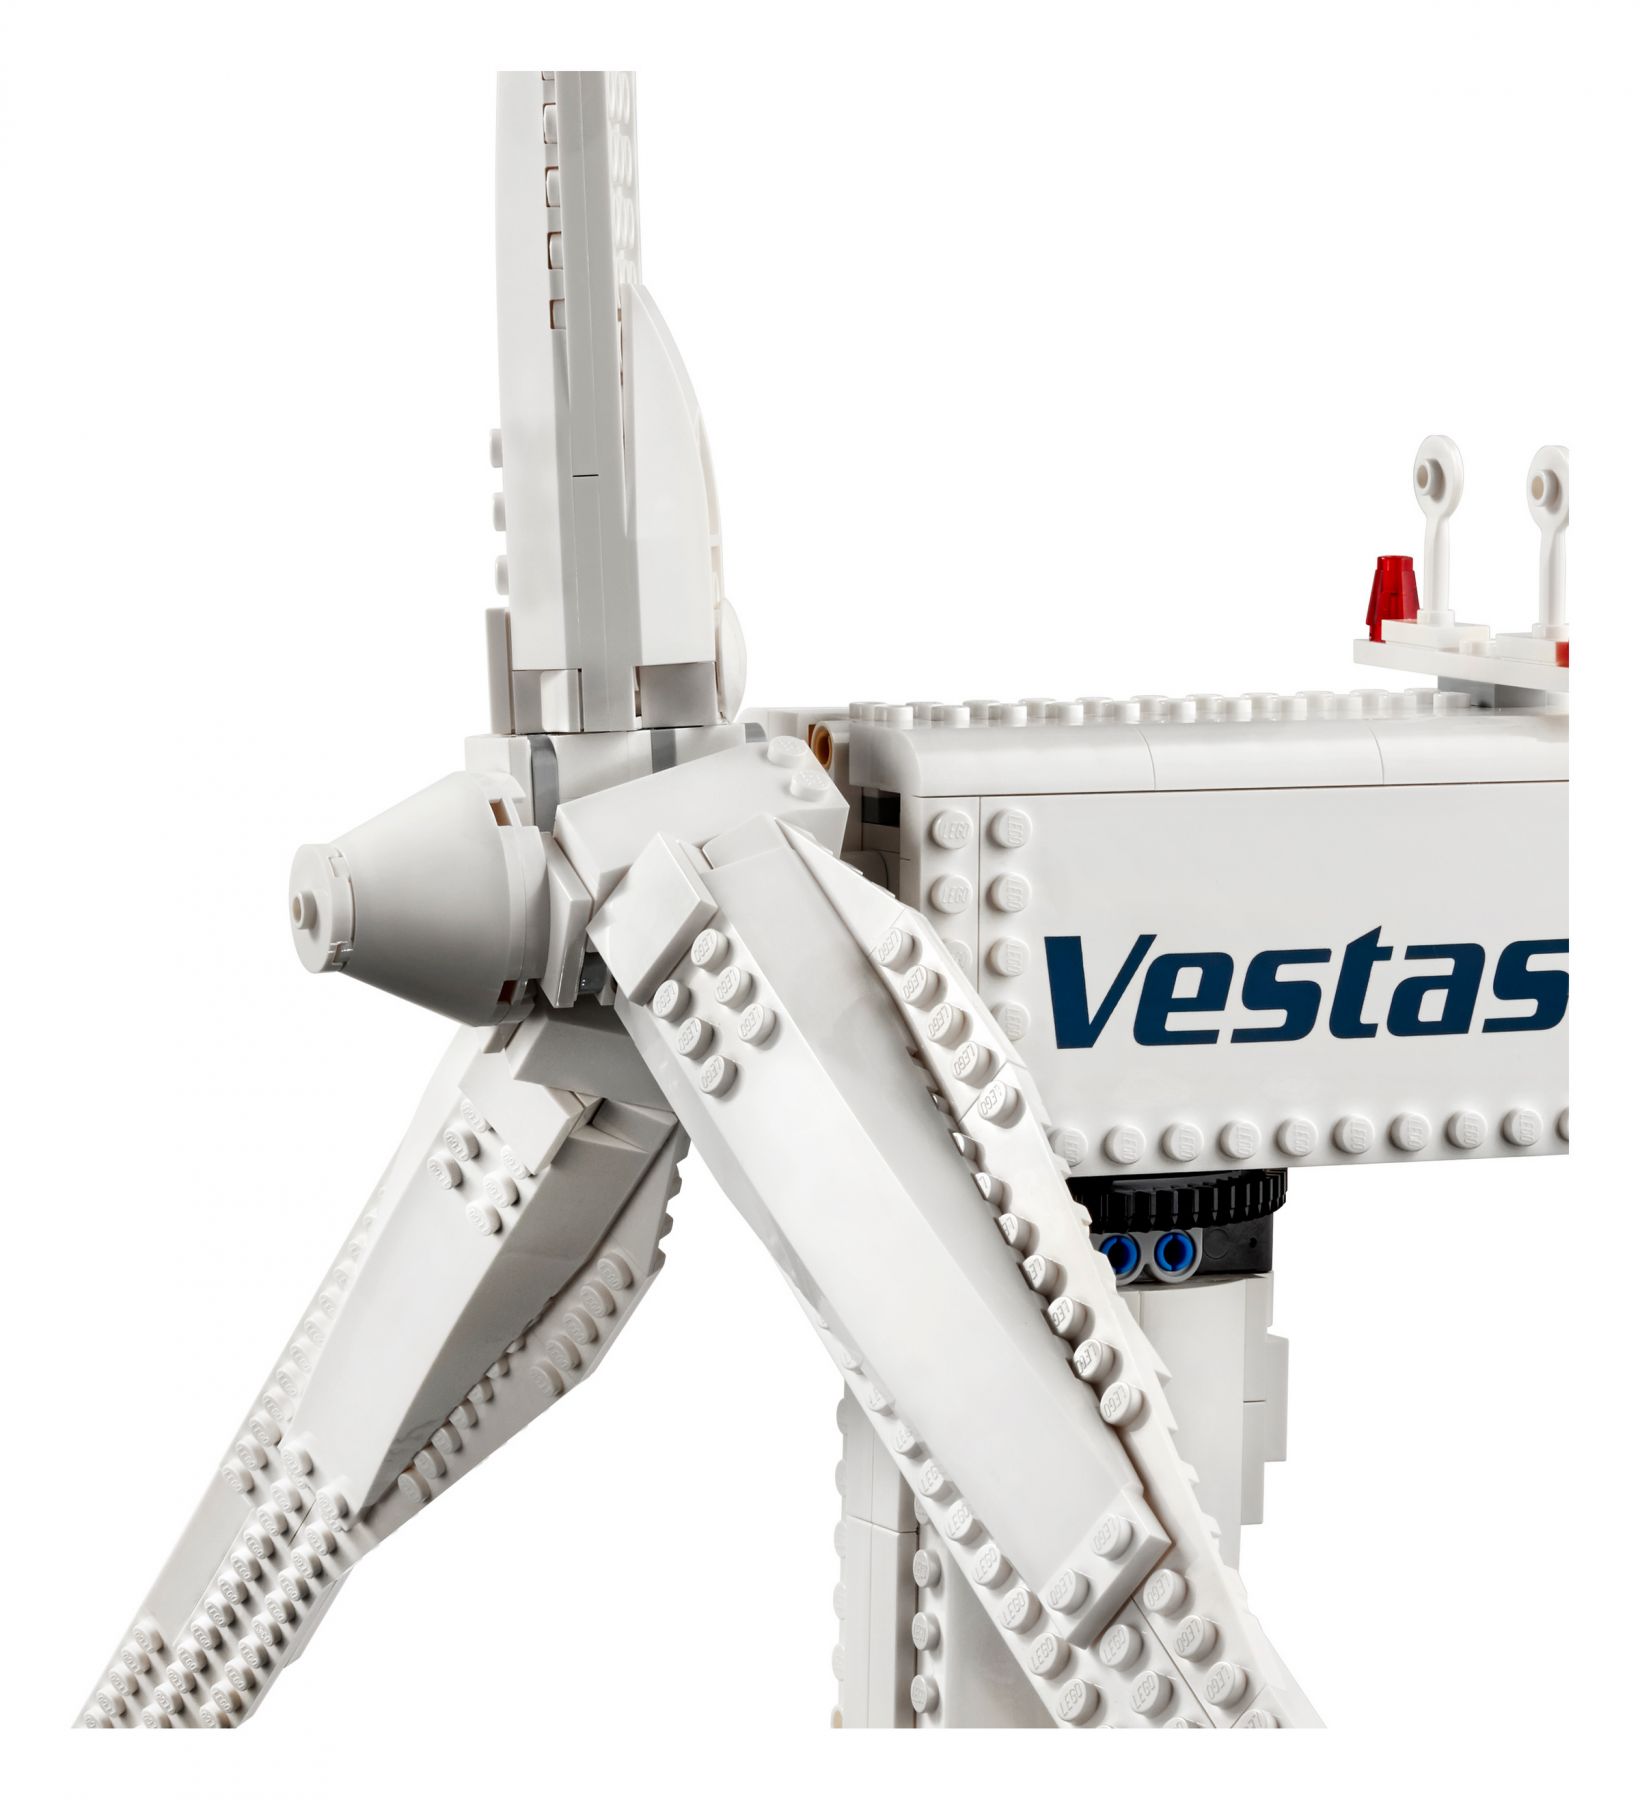 LEGO Advanced Models 10268 Vestas® Windkraftanlage LEGO_10268_alt3.jpg